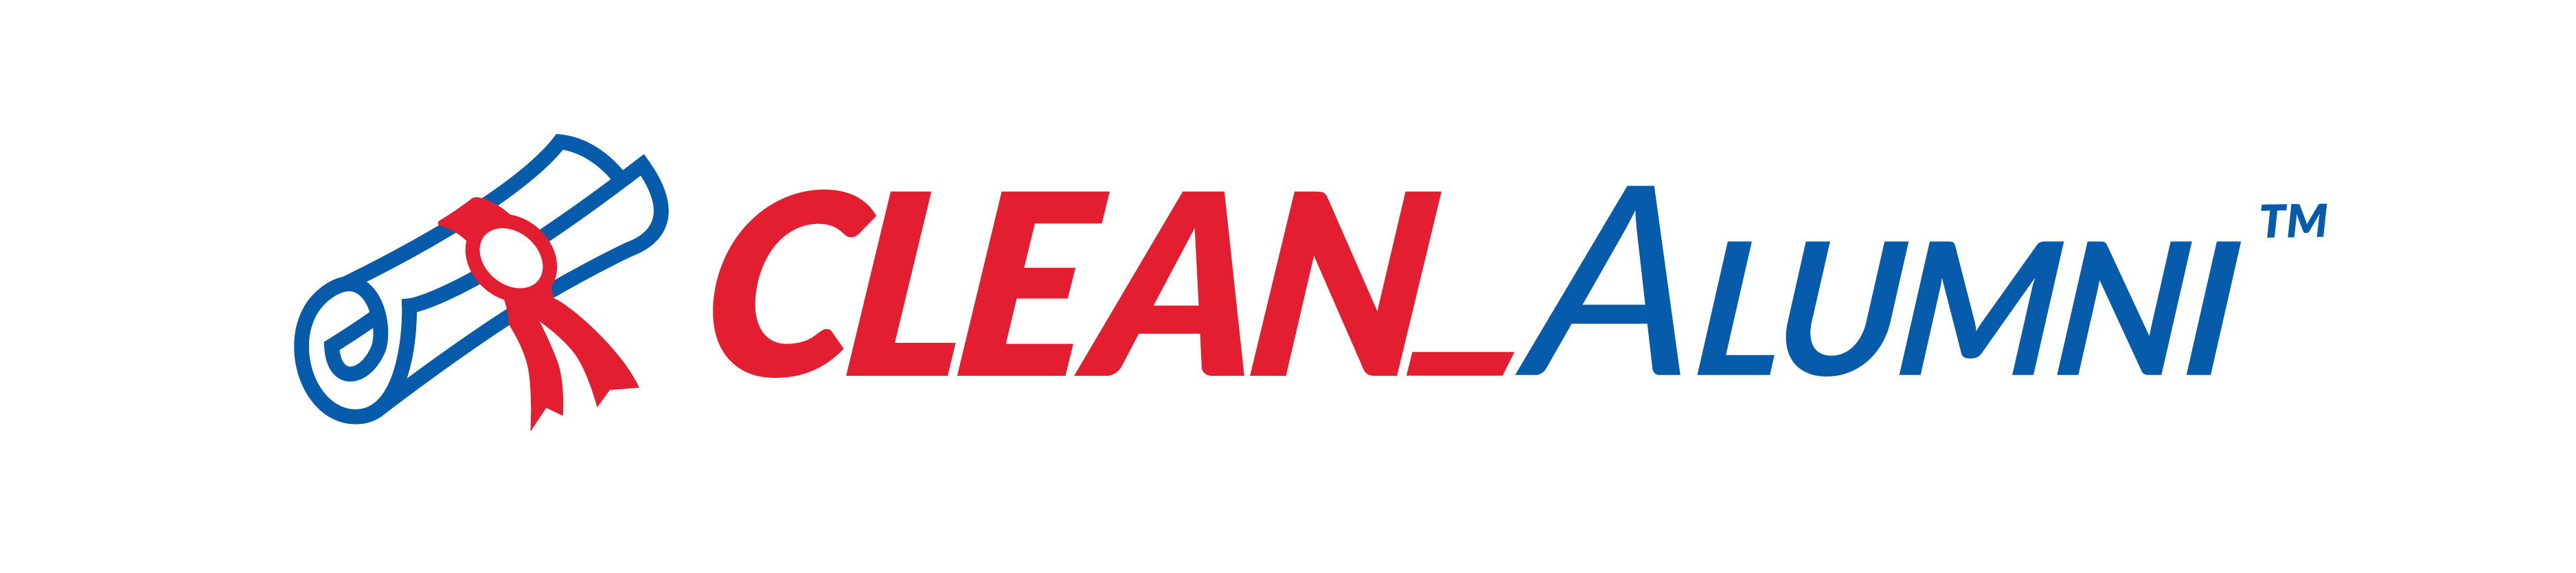 CLEAN_Alumni for Ellucian Advance